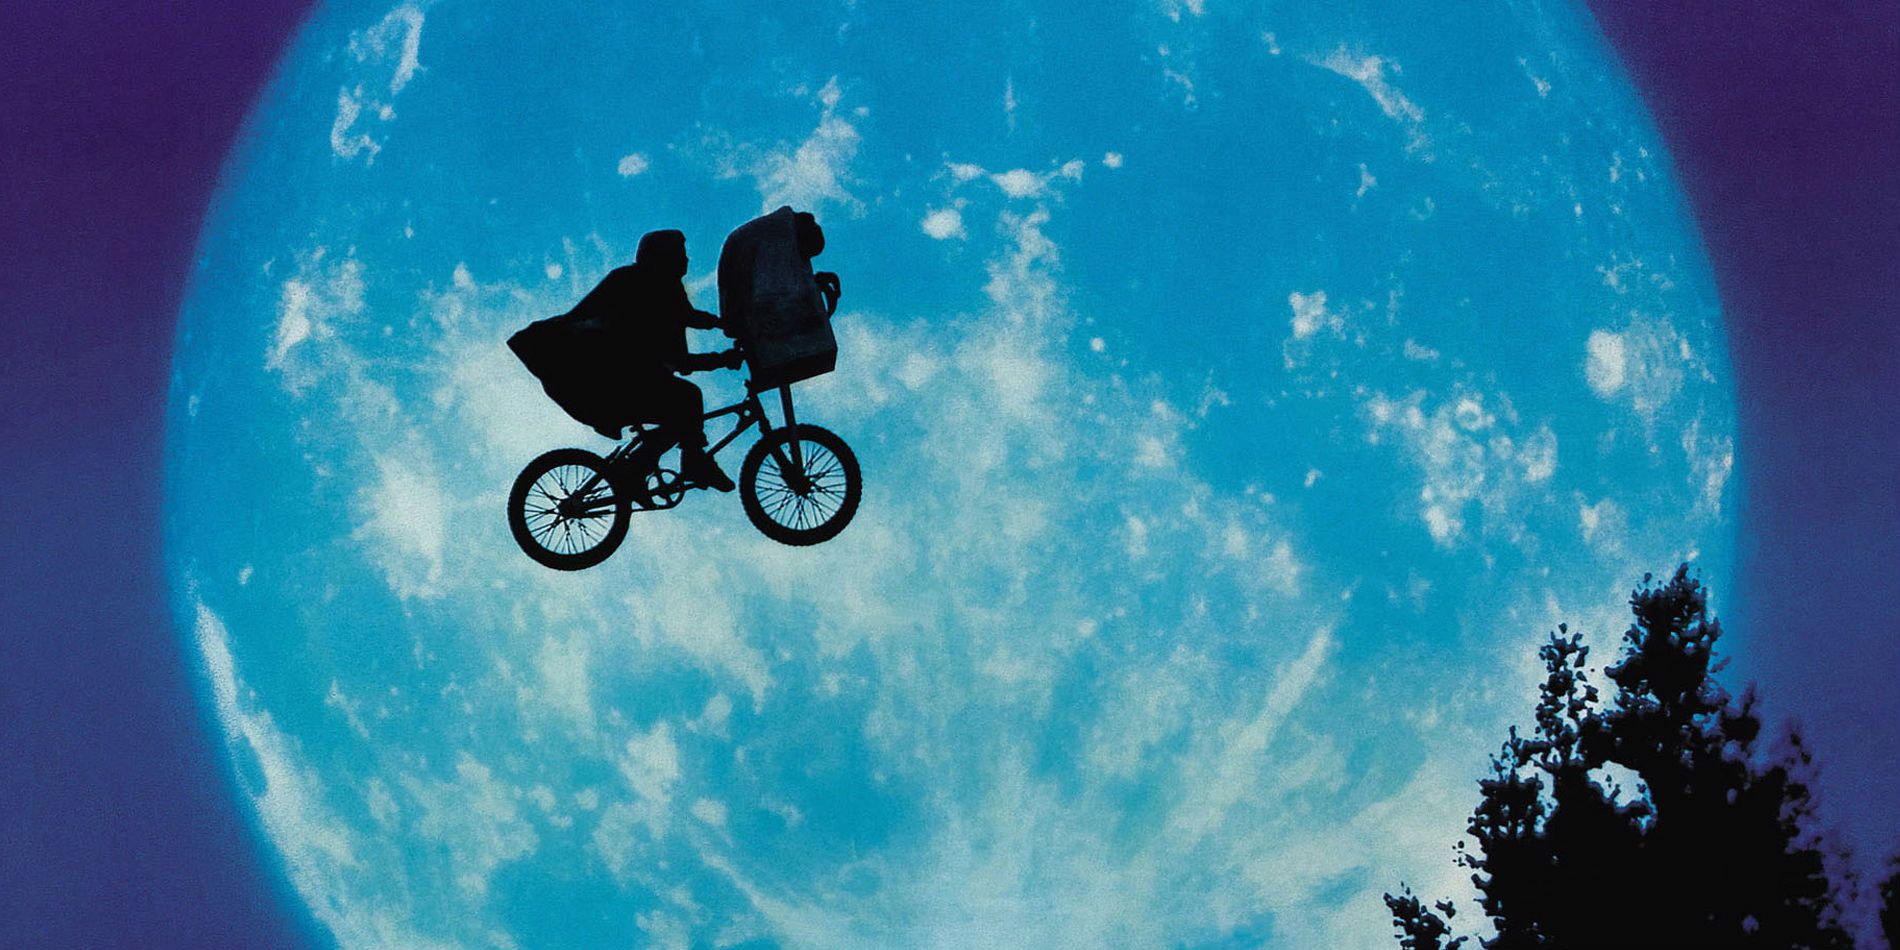 E.T. moon and bike